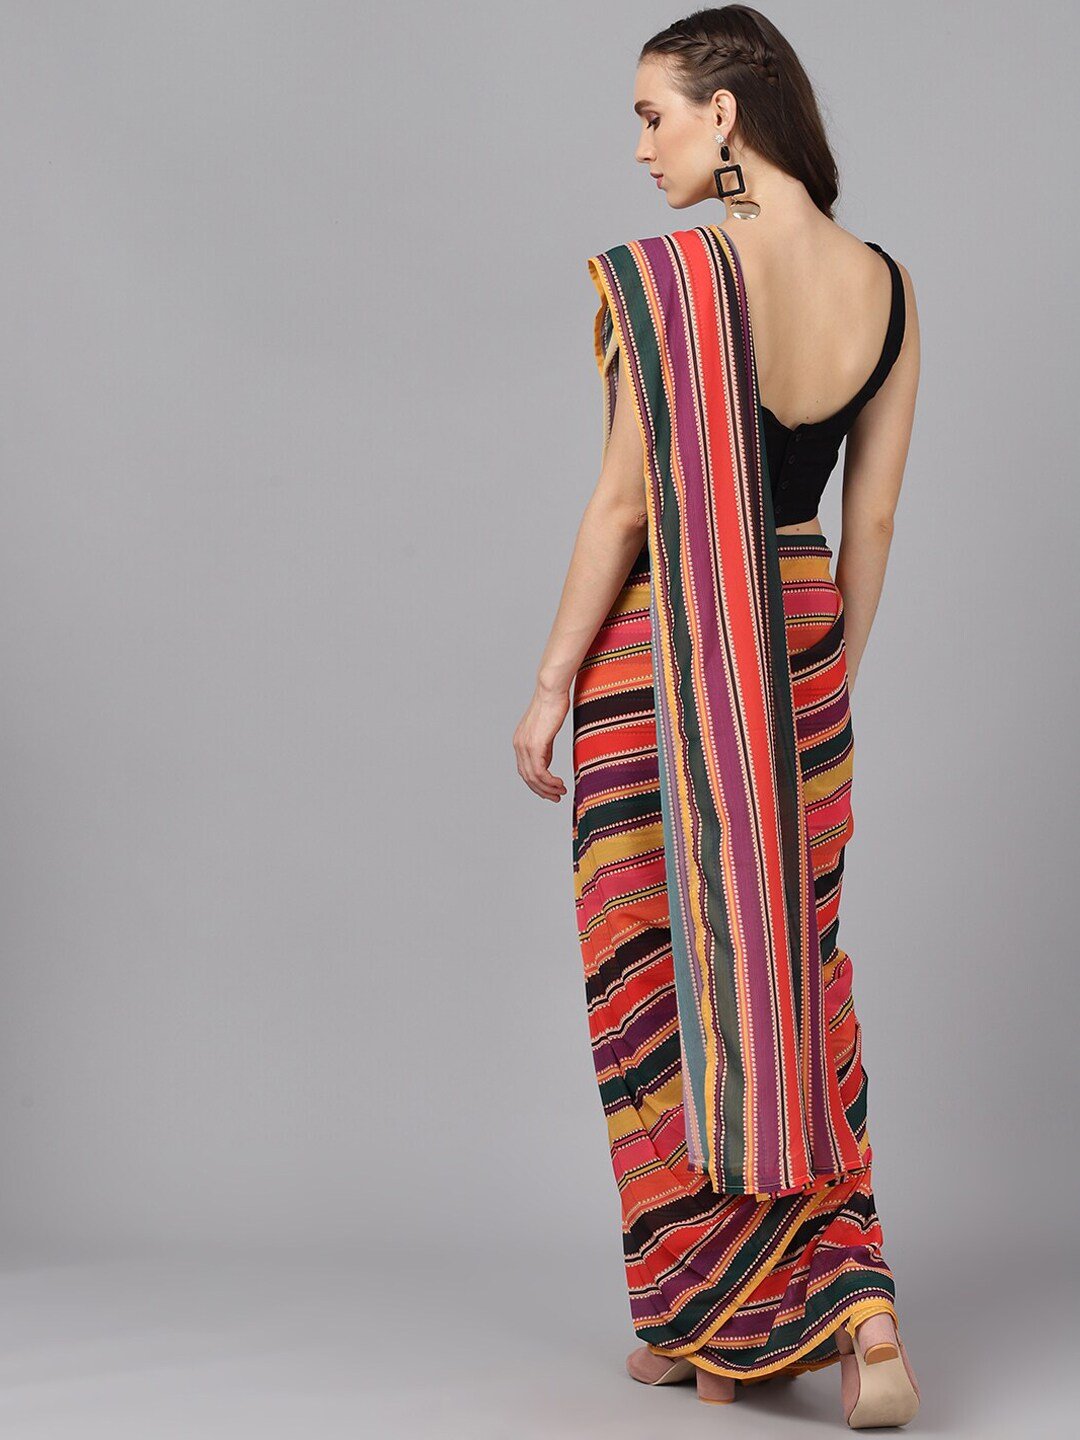 Women's Multicoloured Striped Poly Georgette Saree - AKS